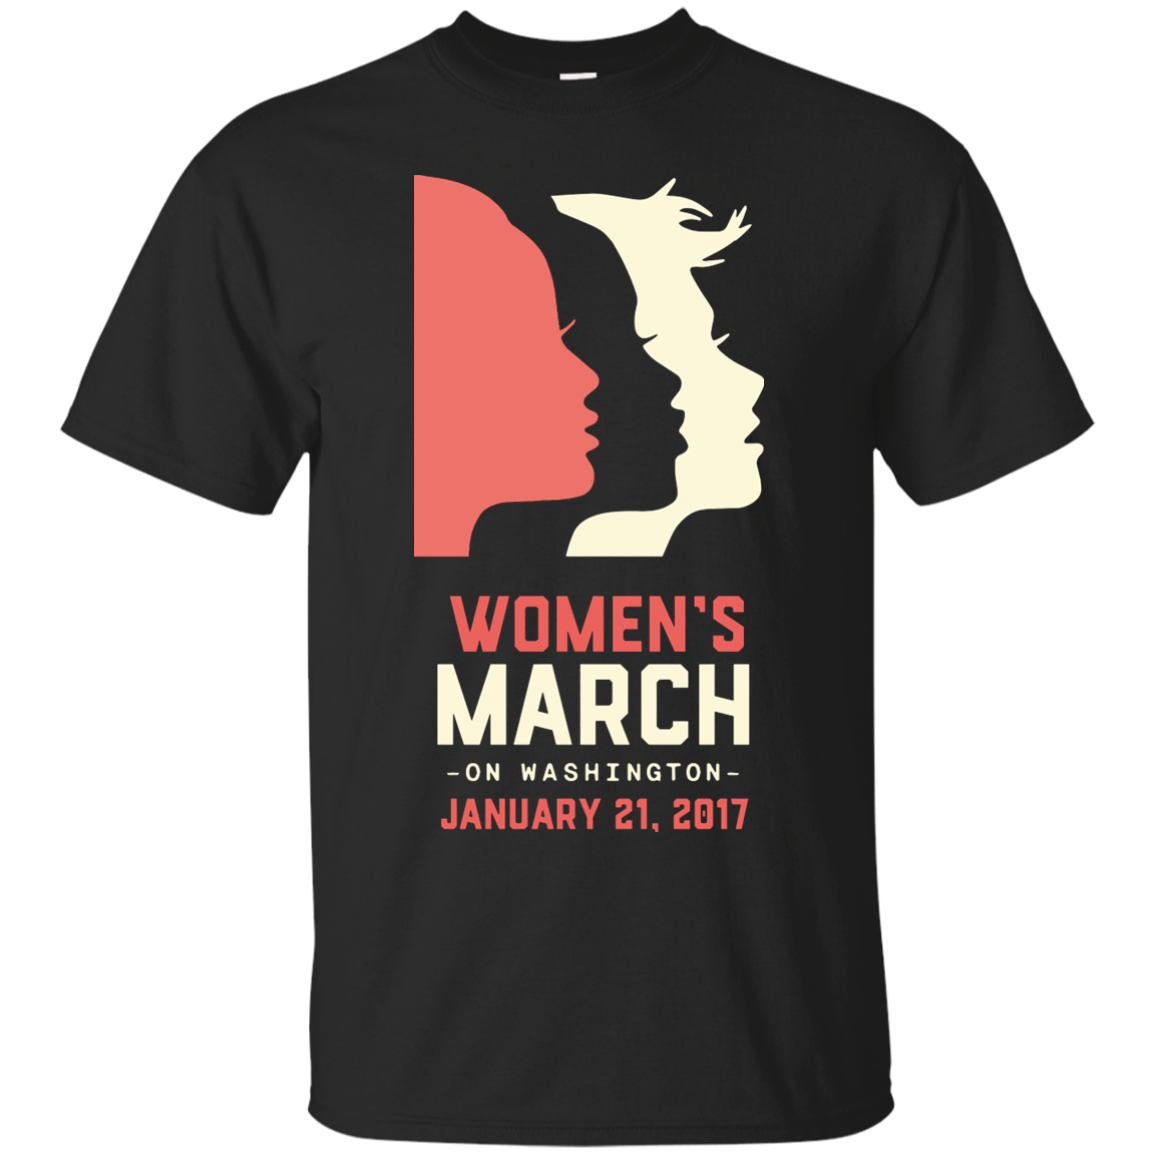 Women's March on Washington shirt